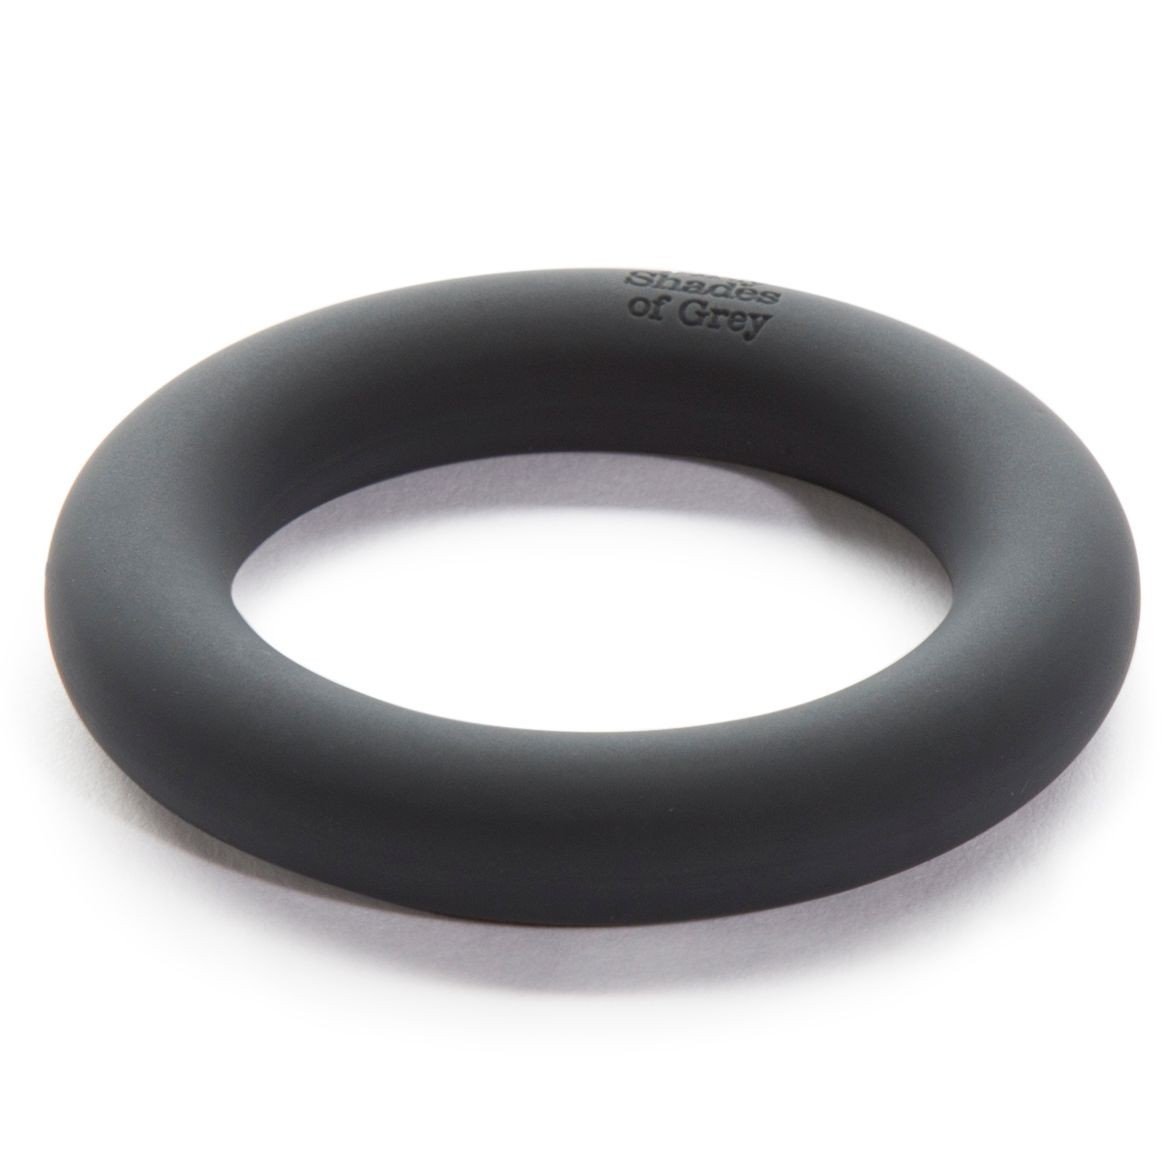 Fifty Shades of Grey A Perfect O Silicone Cock Ring, černý elastický kroužek na penis